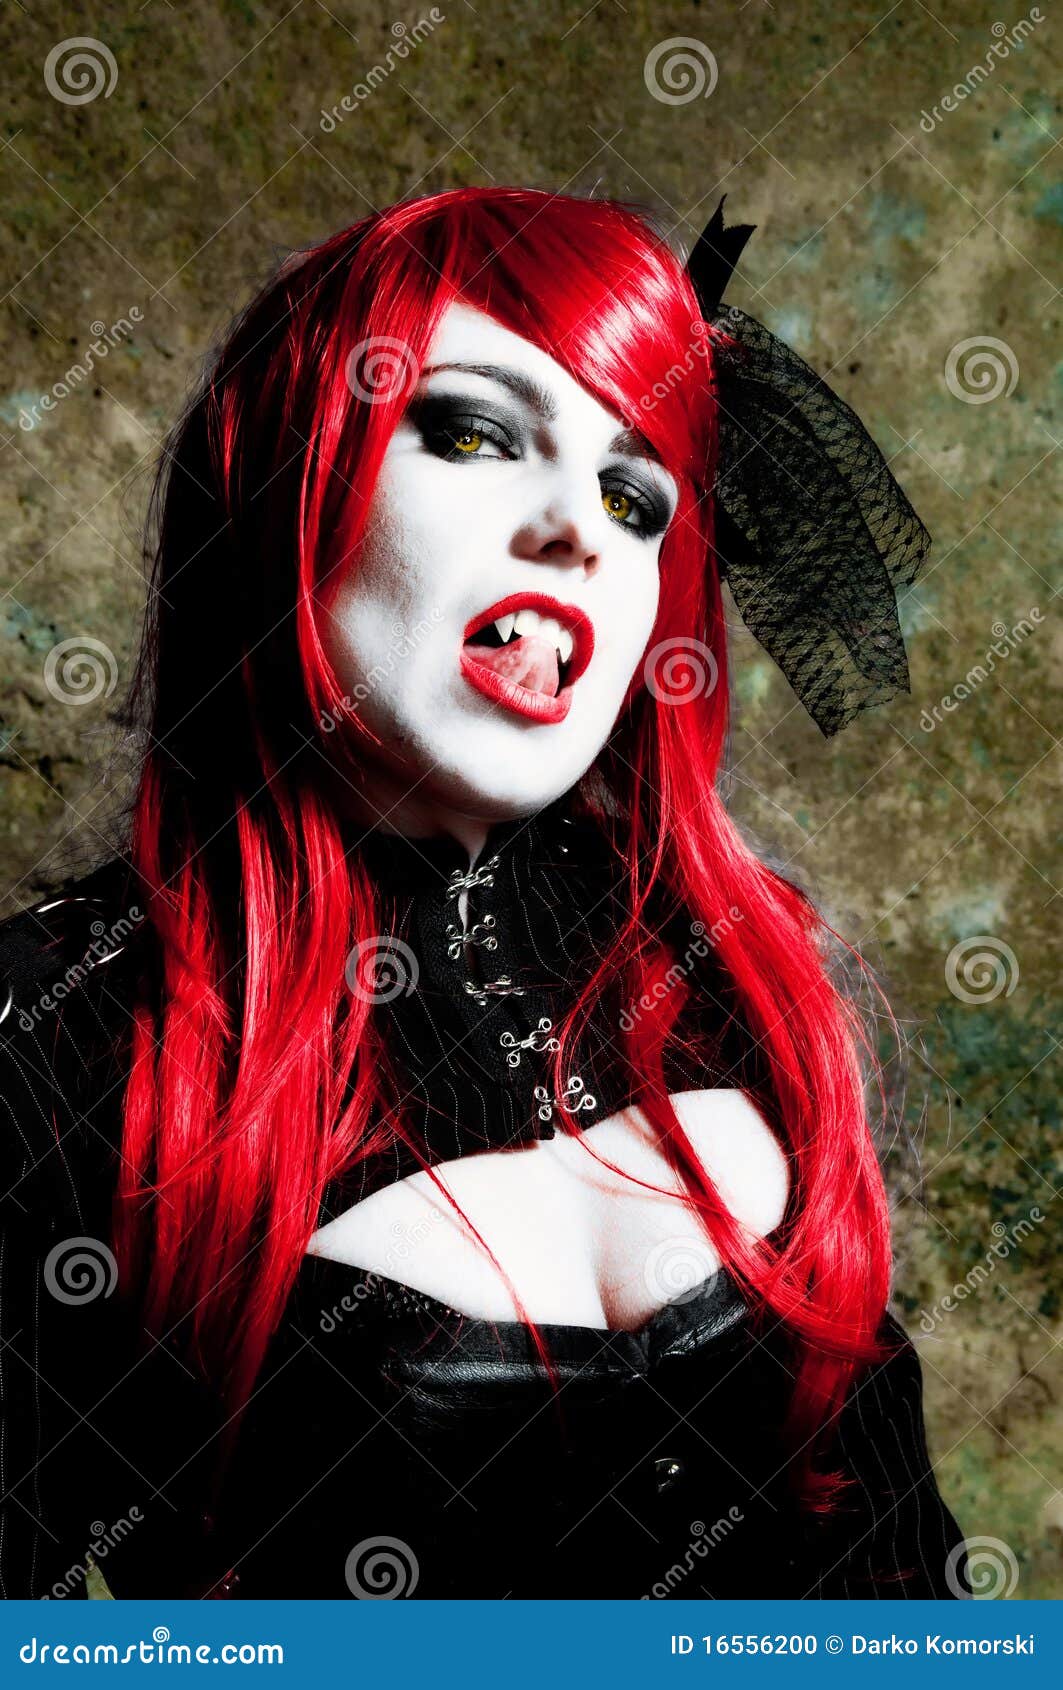 Red head vampire